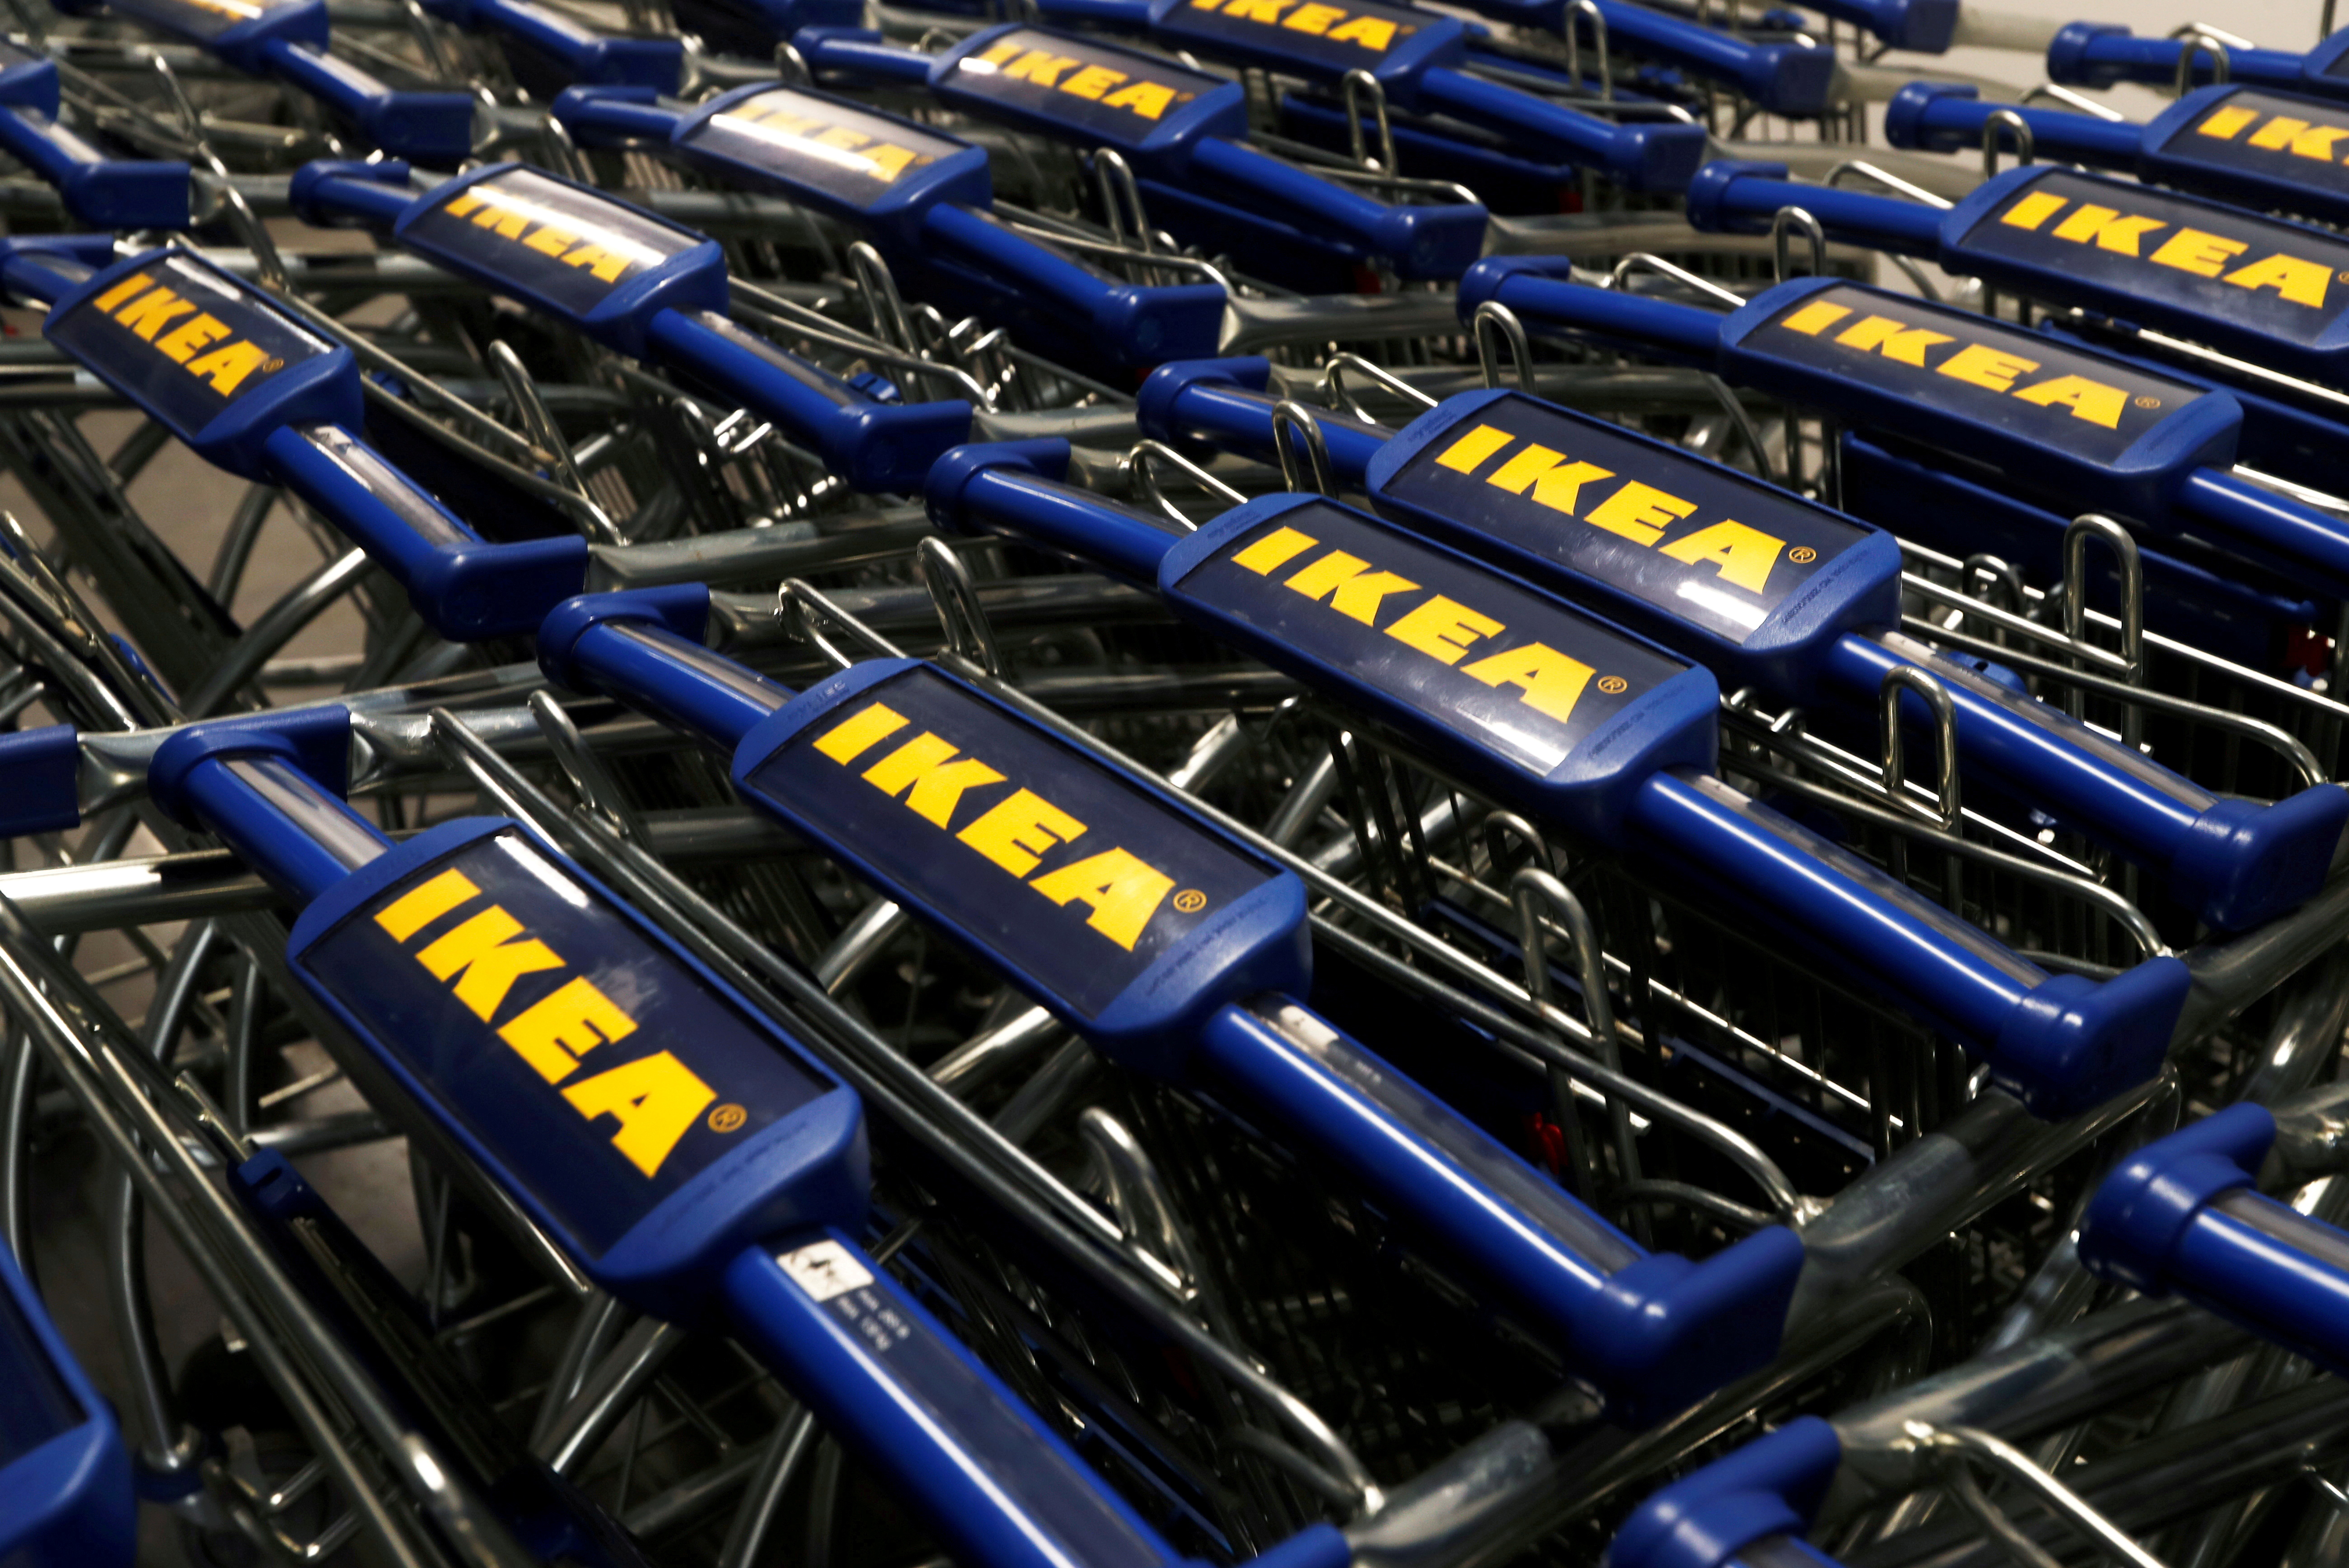 The IKEA logo is seen on shopping carts inside the new IKEA store in Navi Mumbai